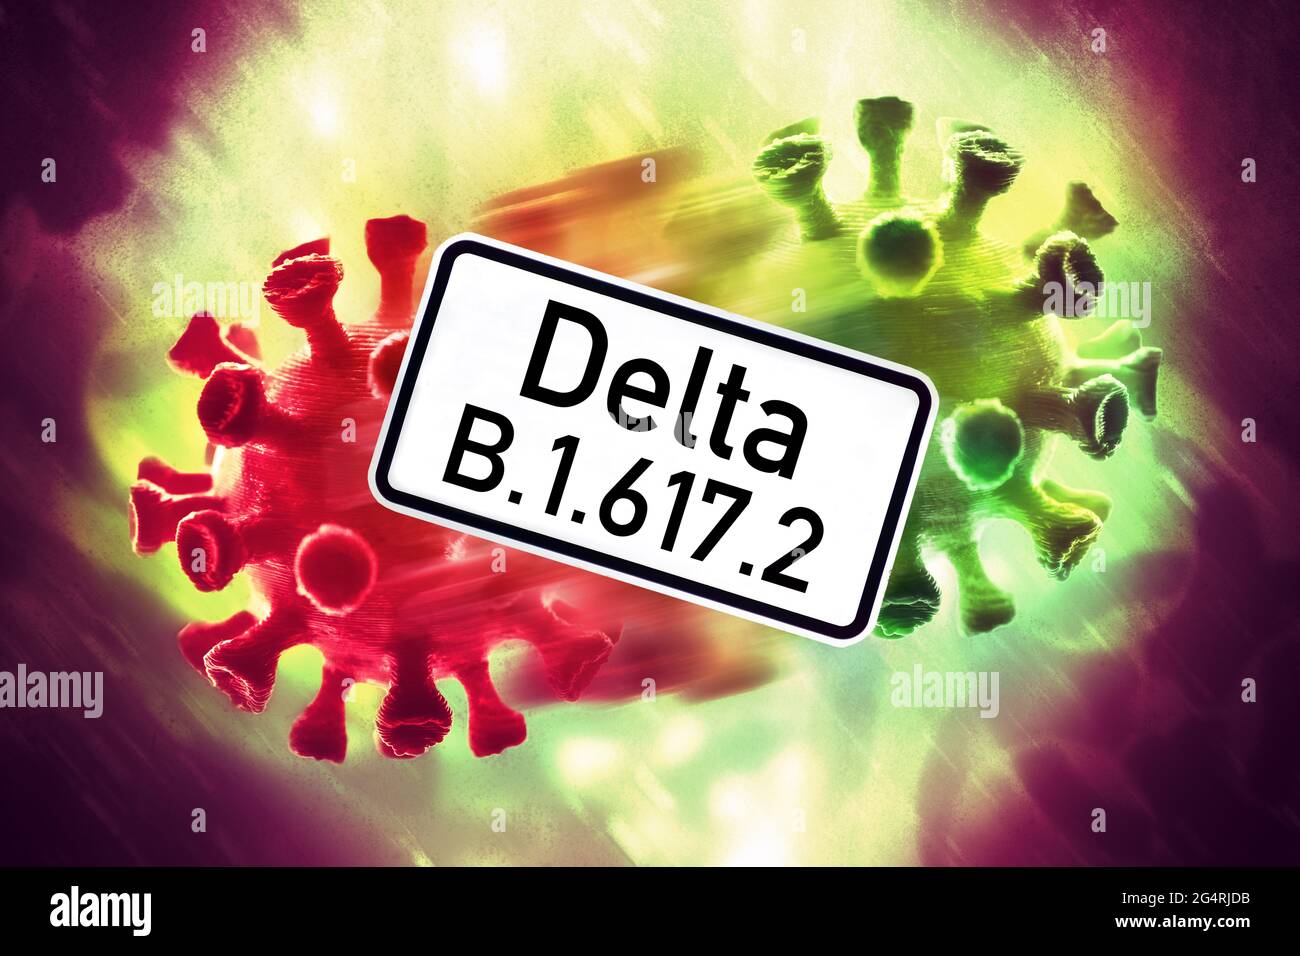 Corona viruses, delta variant B.1.617.2 Stock Photo